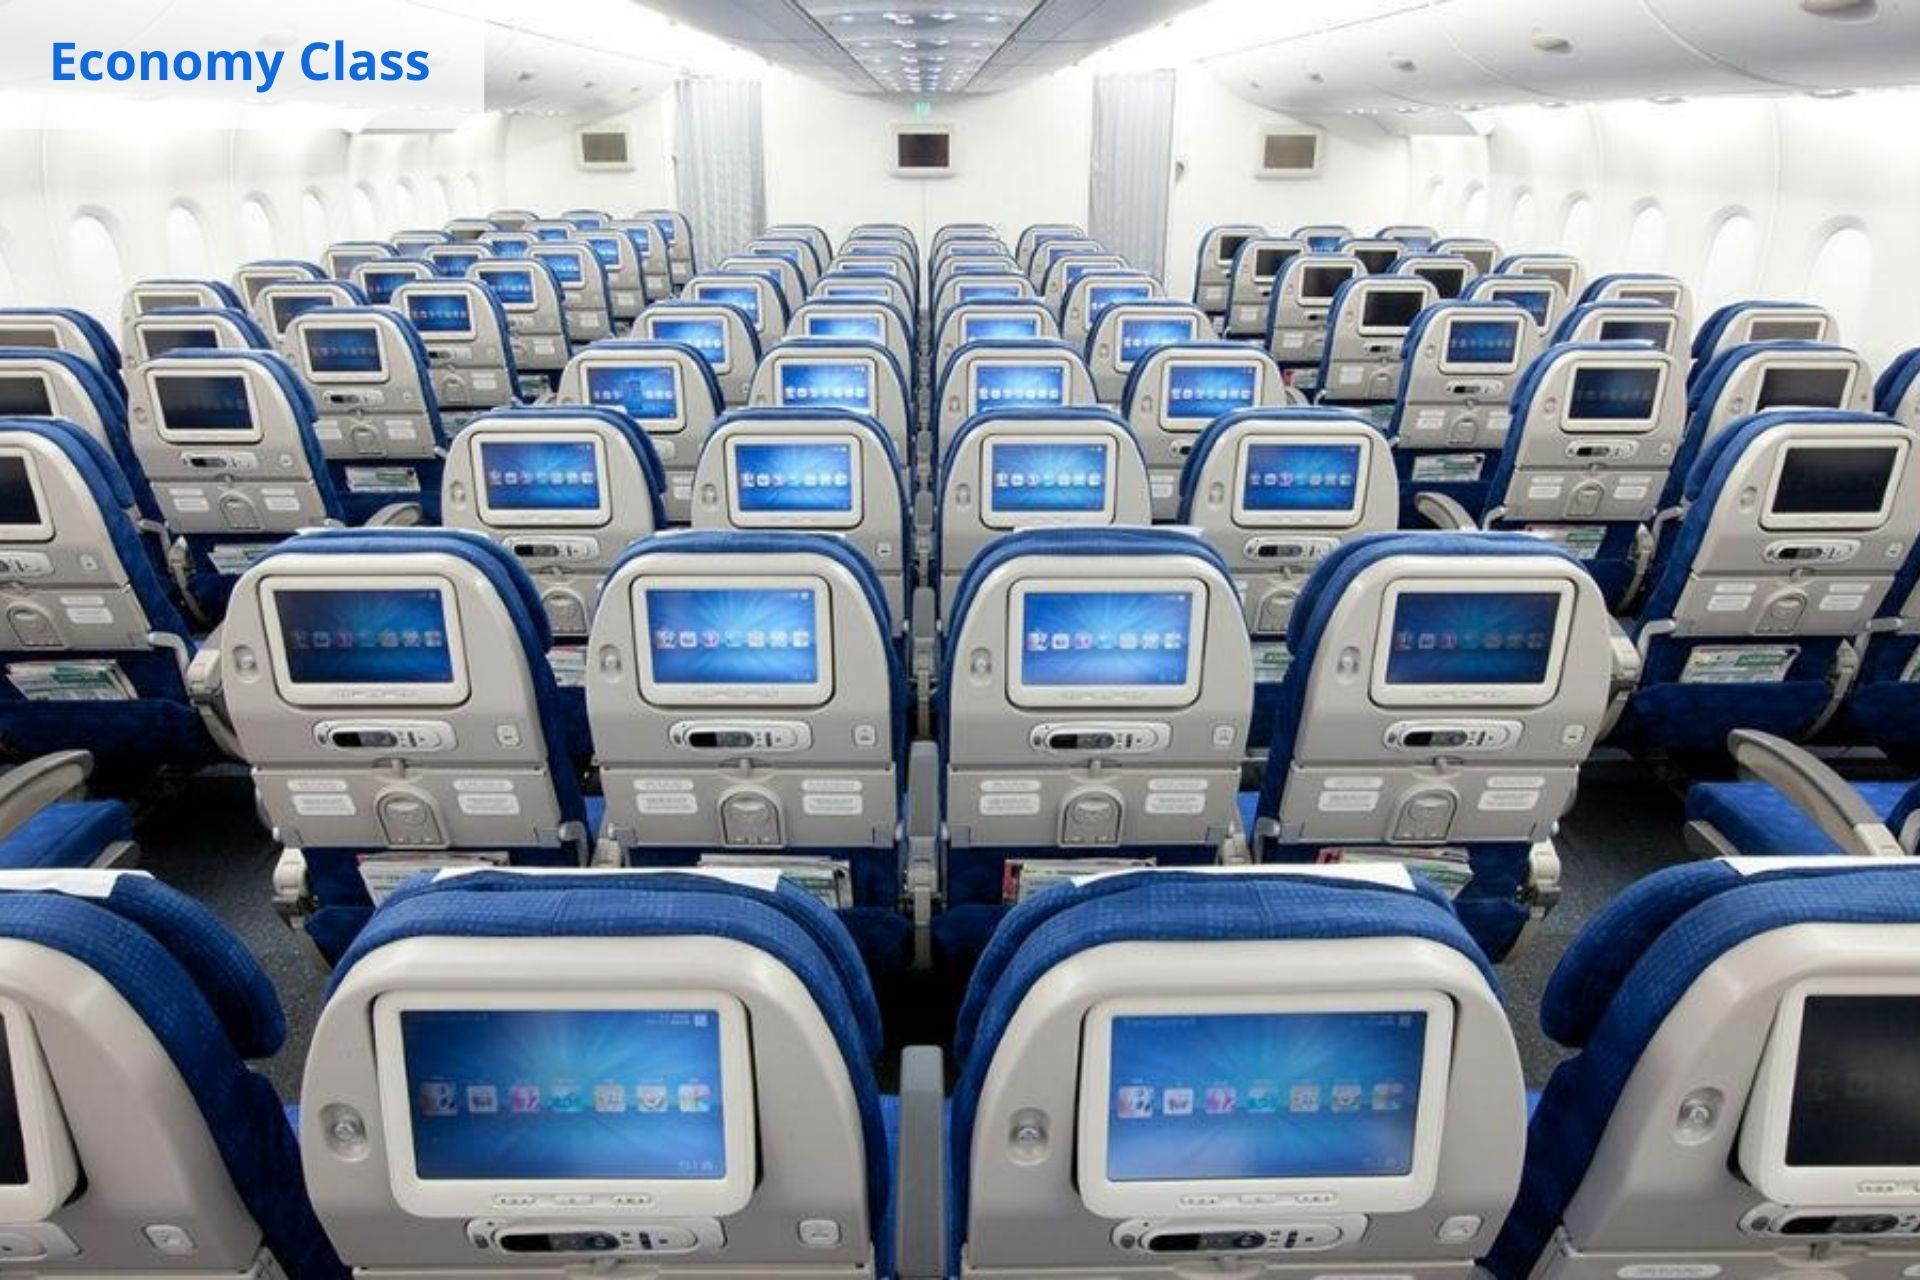 Korean Air economy class